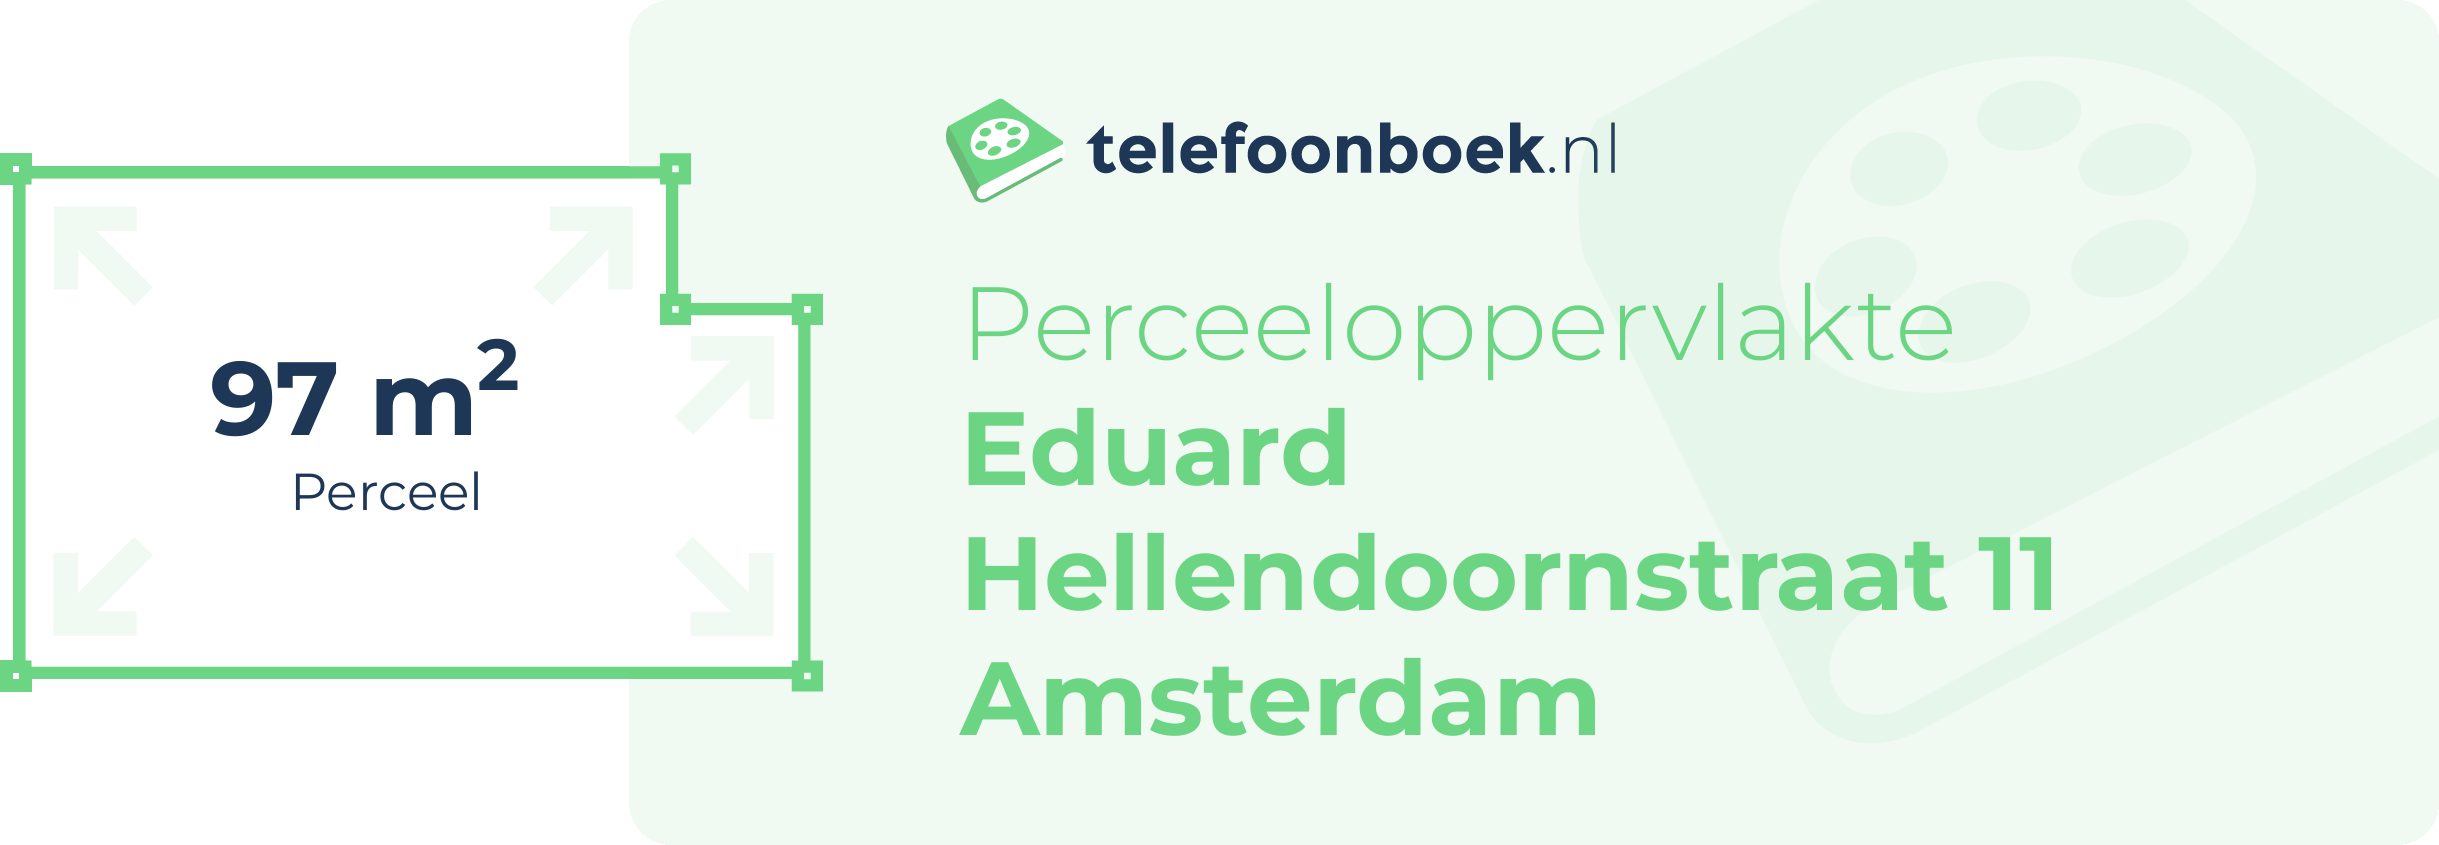 Perceeloppervlakte Eduard Hellendoornstraat 11 Amsterdam